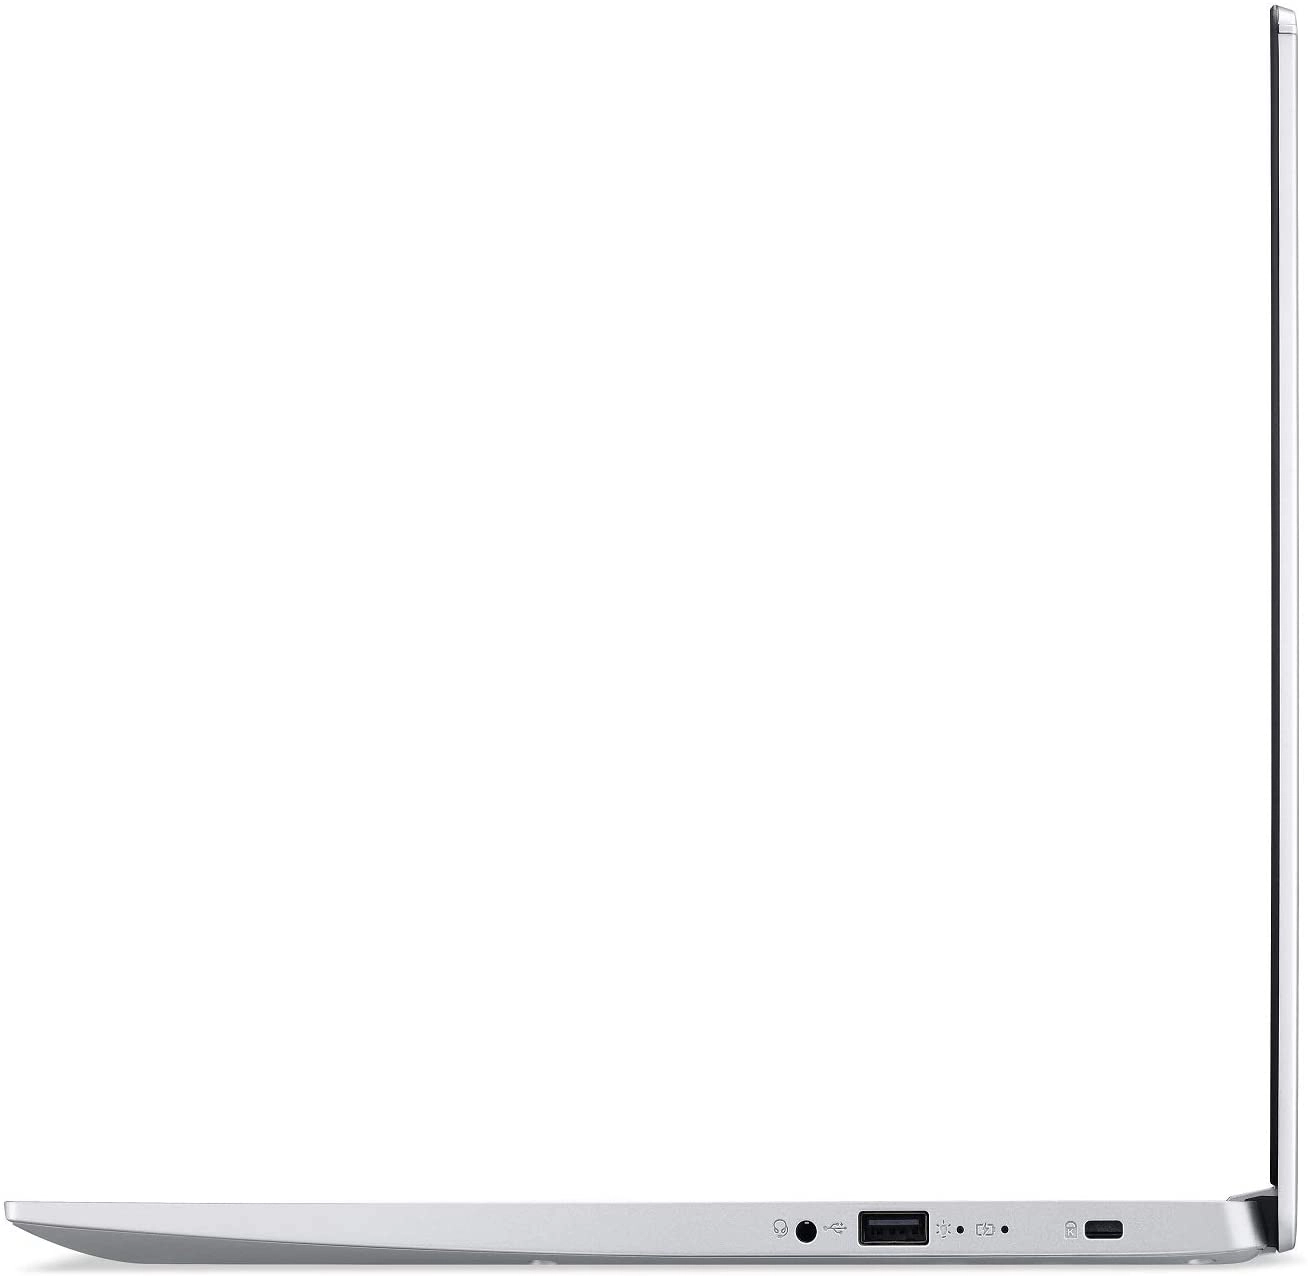 Acer A515-55-75NC laptop image